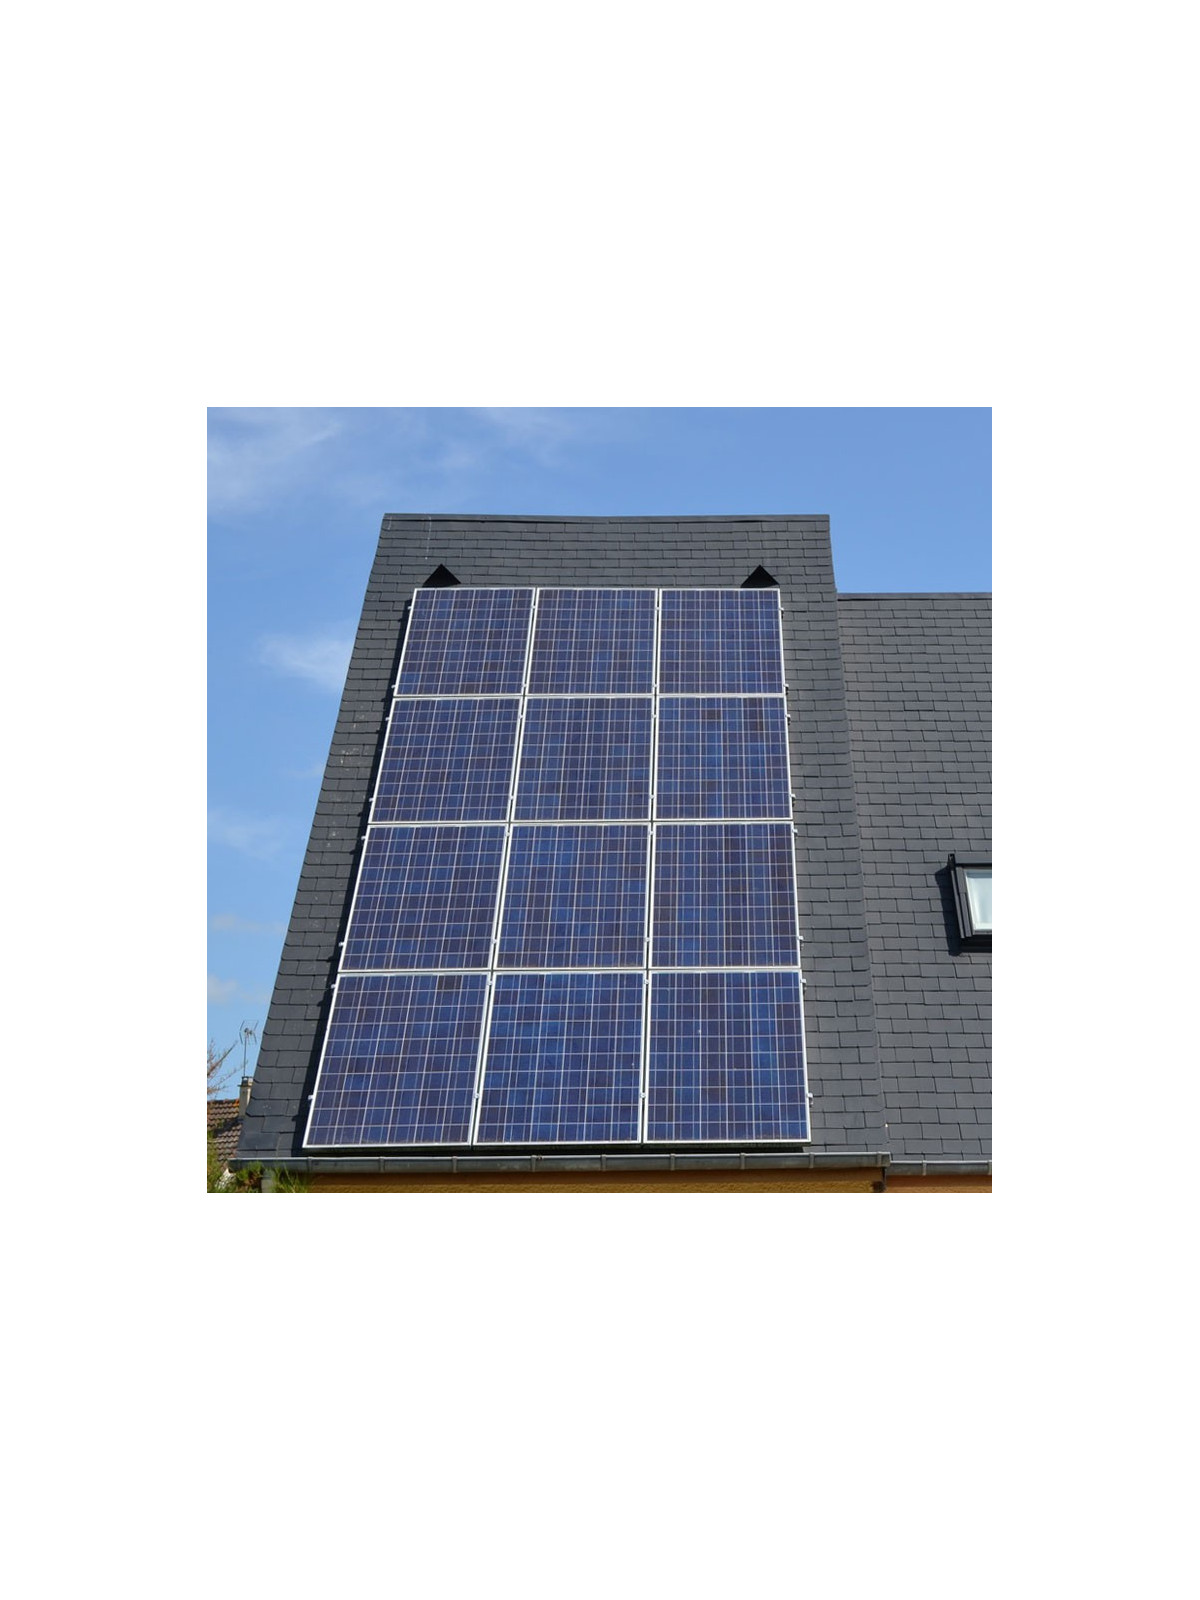 Sofar Solar HYD8KTL-3PH (0% MwSt.*) HV Hybrid Wechselrichter 3Phasen  8KW-SOFAHYD3PH08000